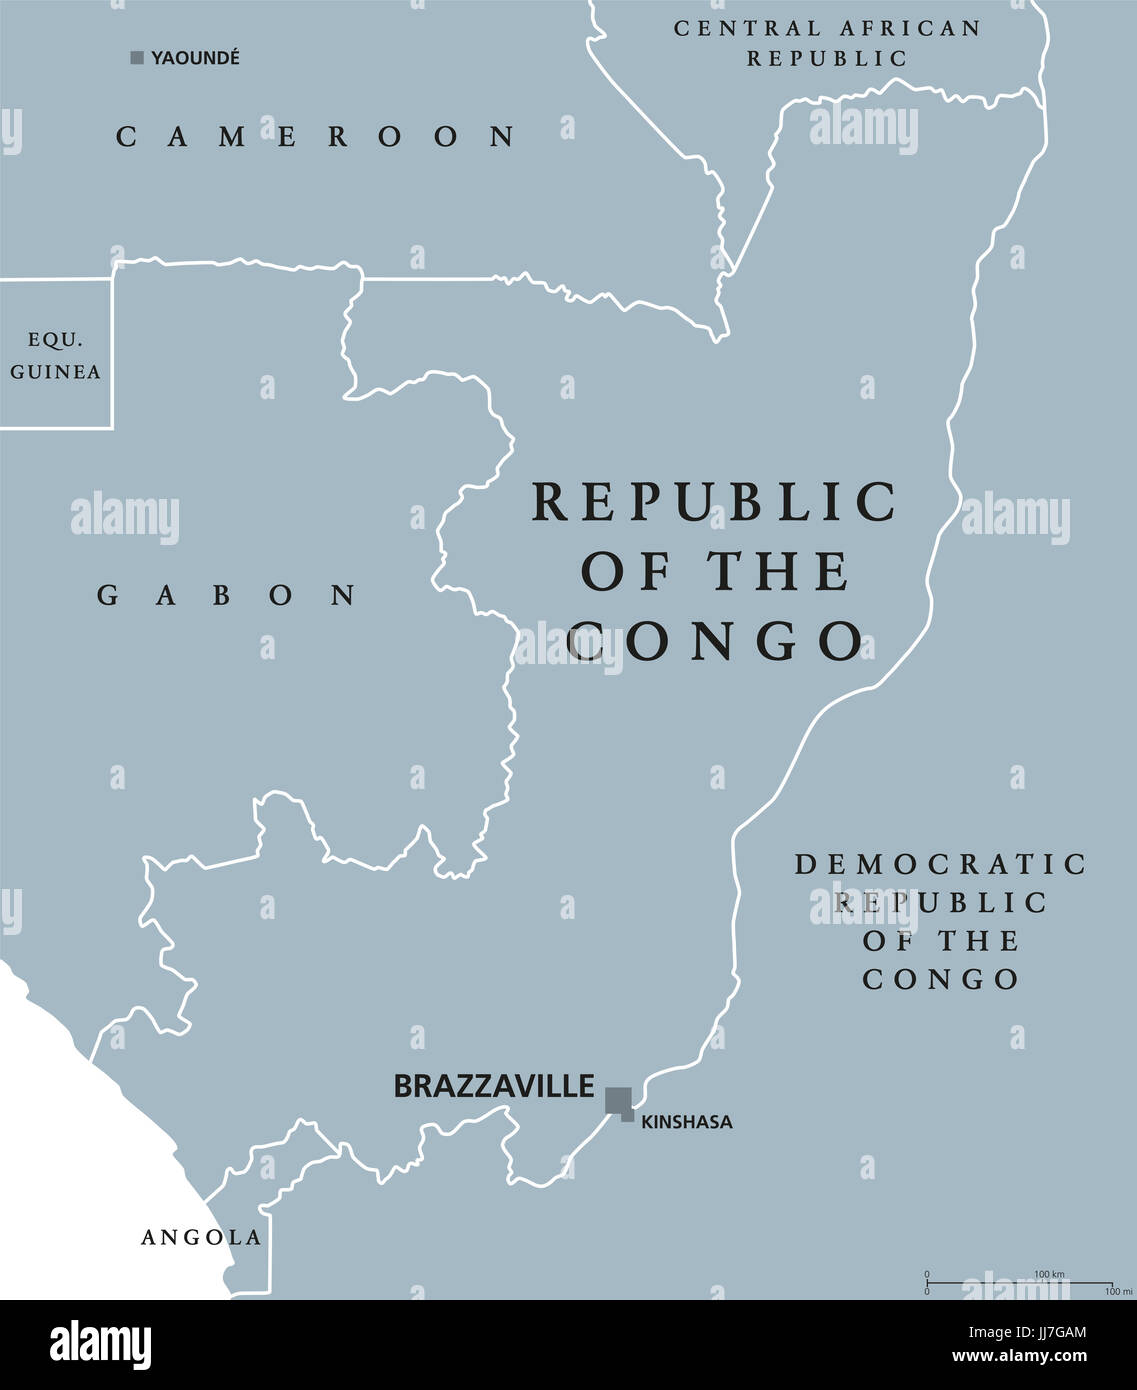 Westafrikanischer staat -Fotos und -Bildmaterial in hoher Auflösung – Alamy